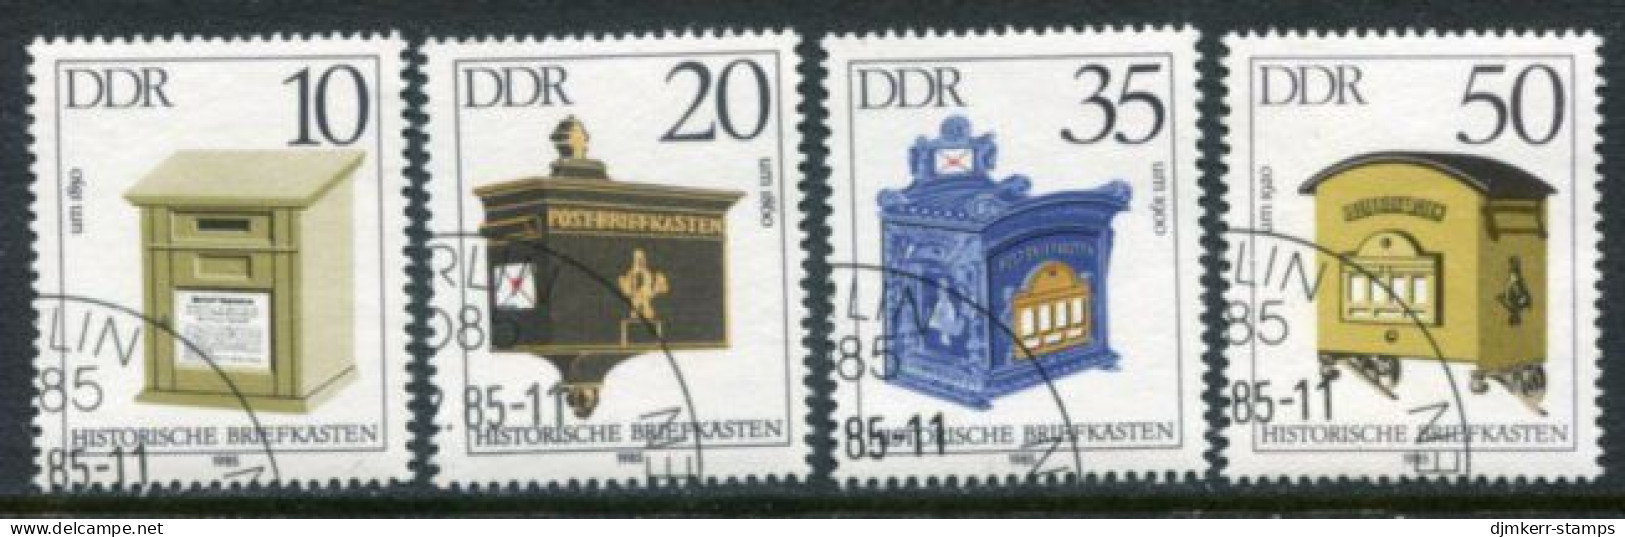 DDR 1985 Histpric Letterboxes Singles Used .  Michel 2924-27 - Oblitérés